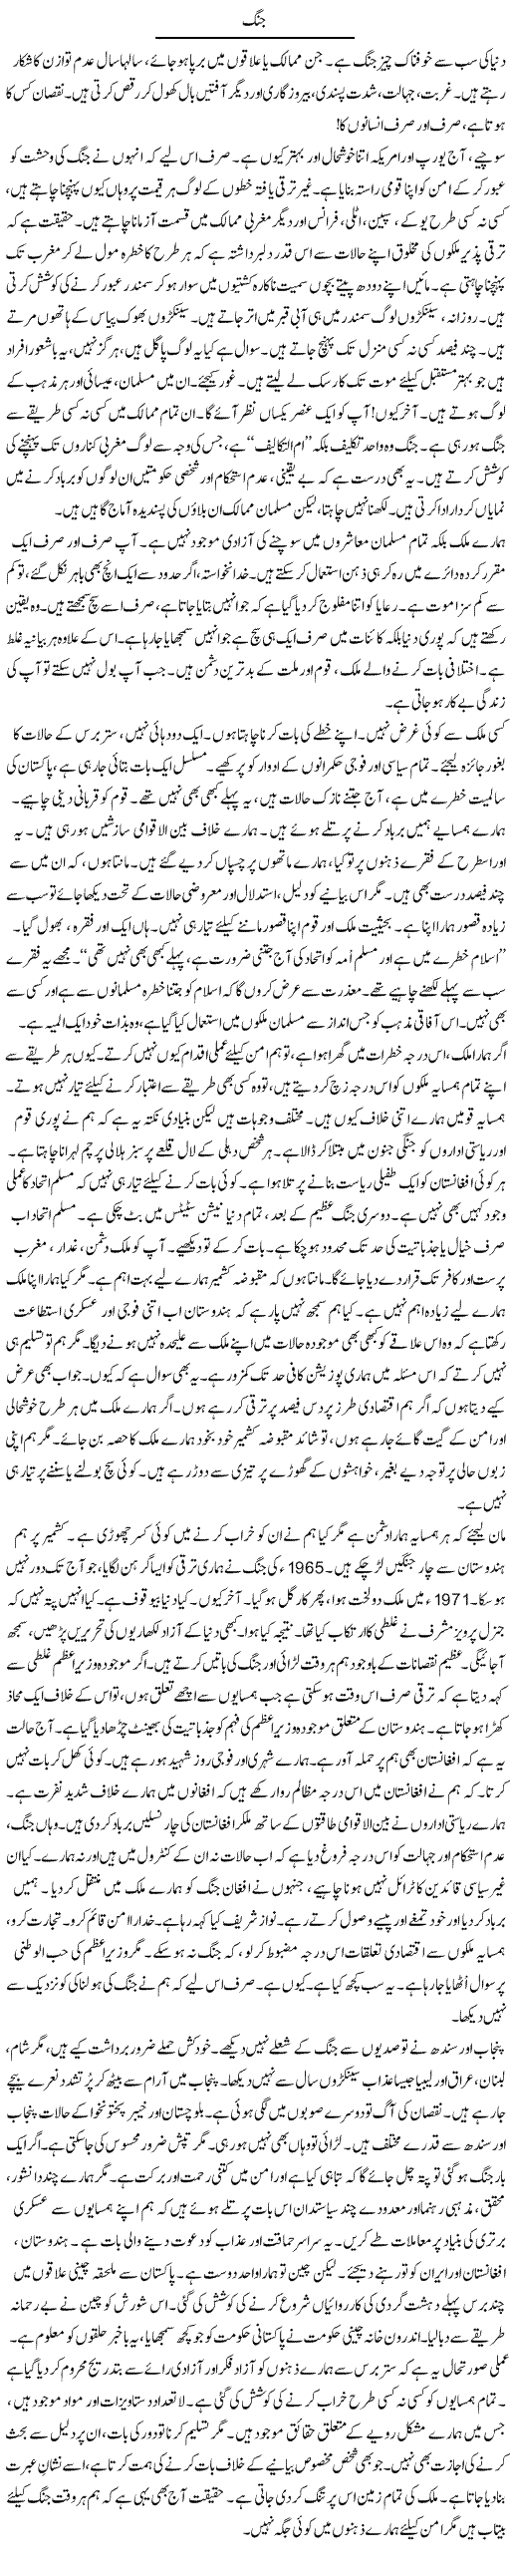 Jung | Rao Manzar Hayat | Daily Urdu Columns